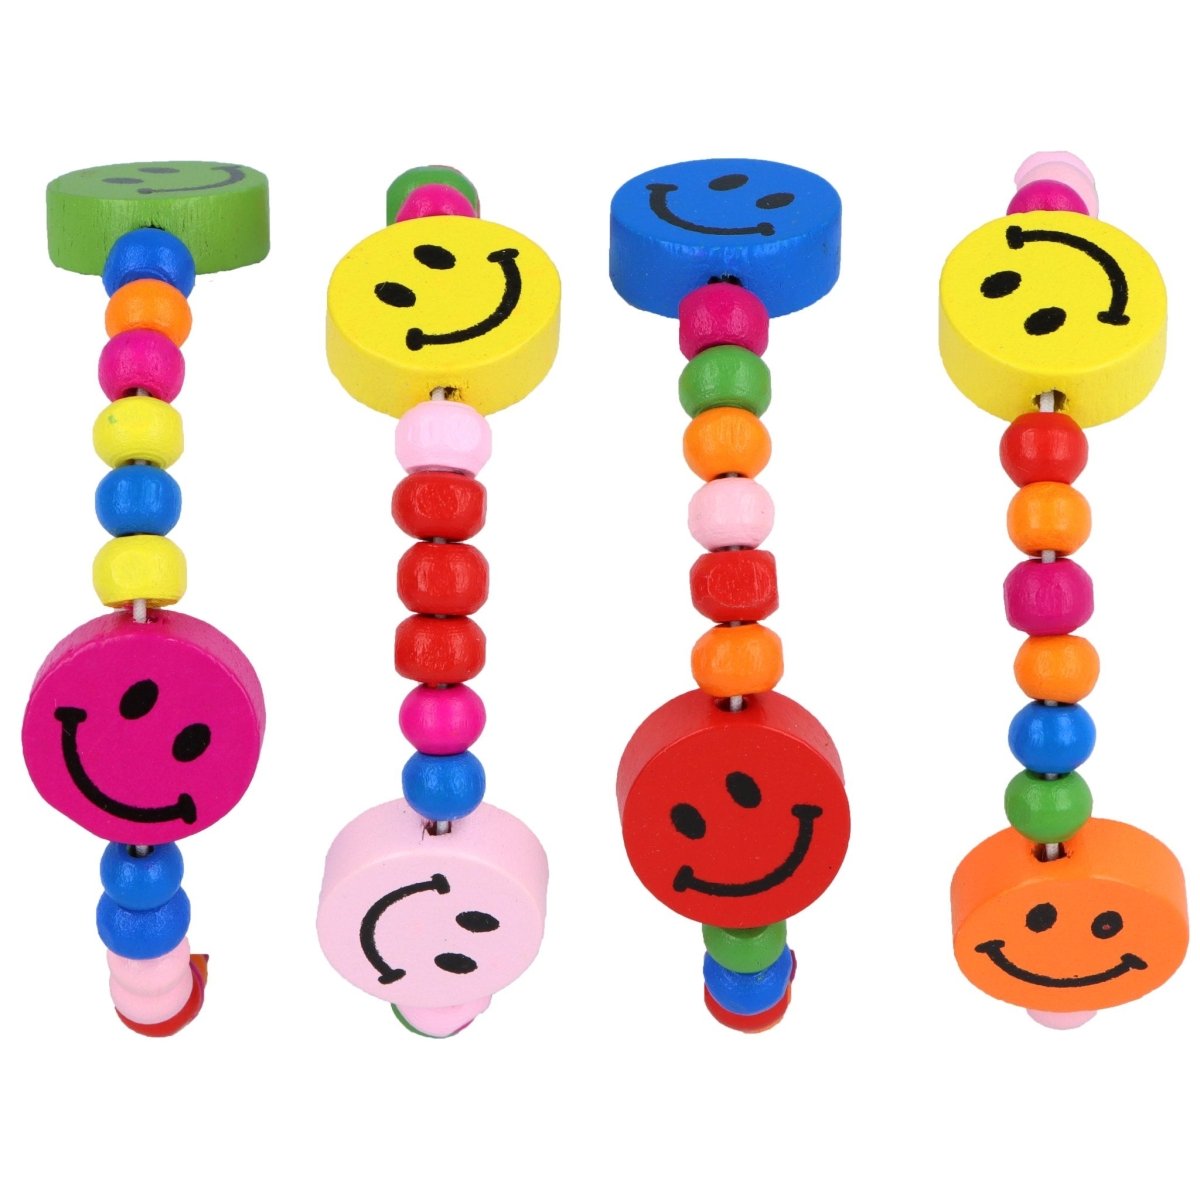 Multicoloured Wooden Bead Bracelet - Kids Party Craft